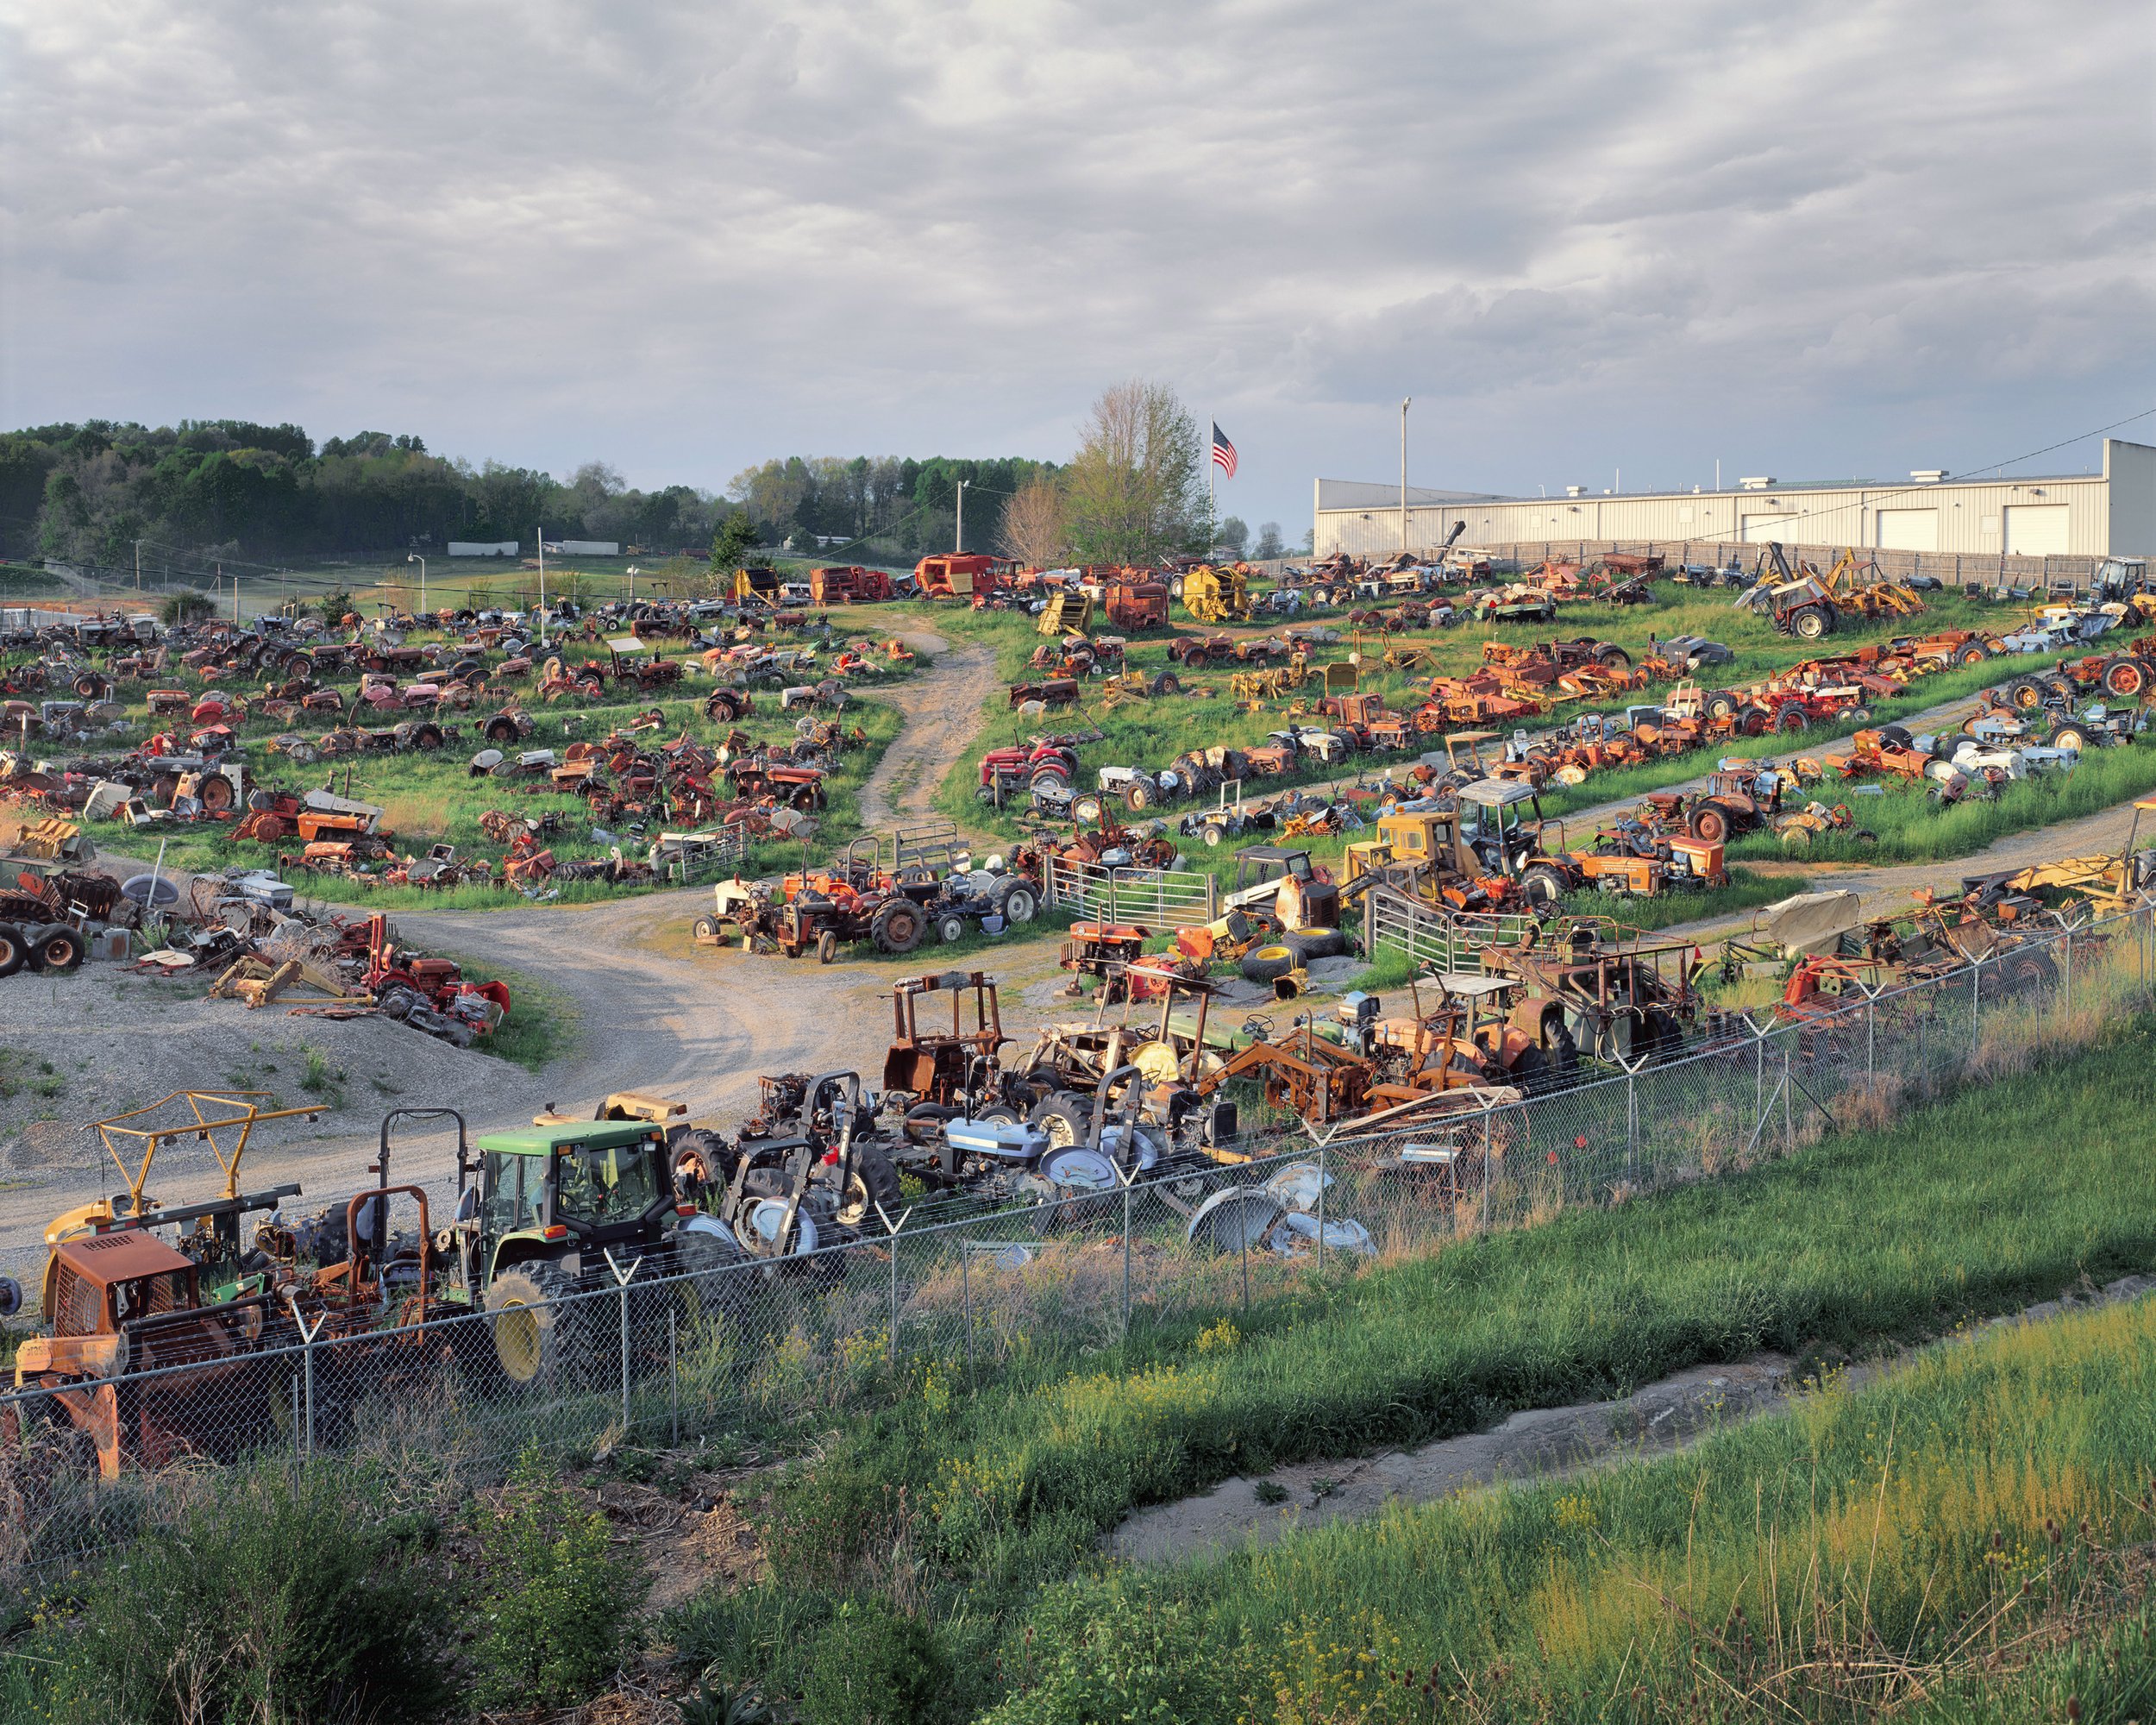 Field of Tractors, Greensboro, North Carolina